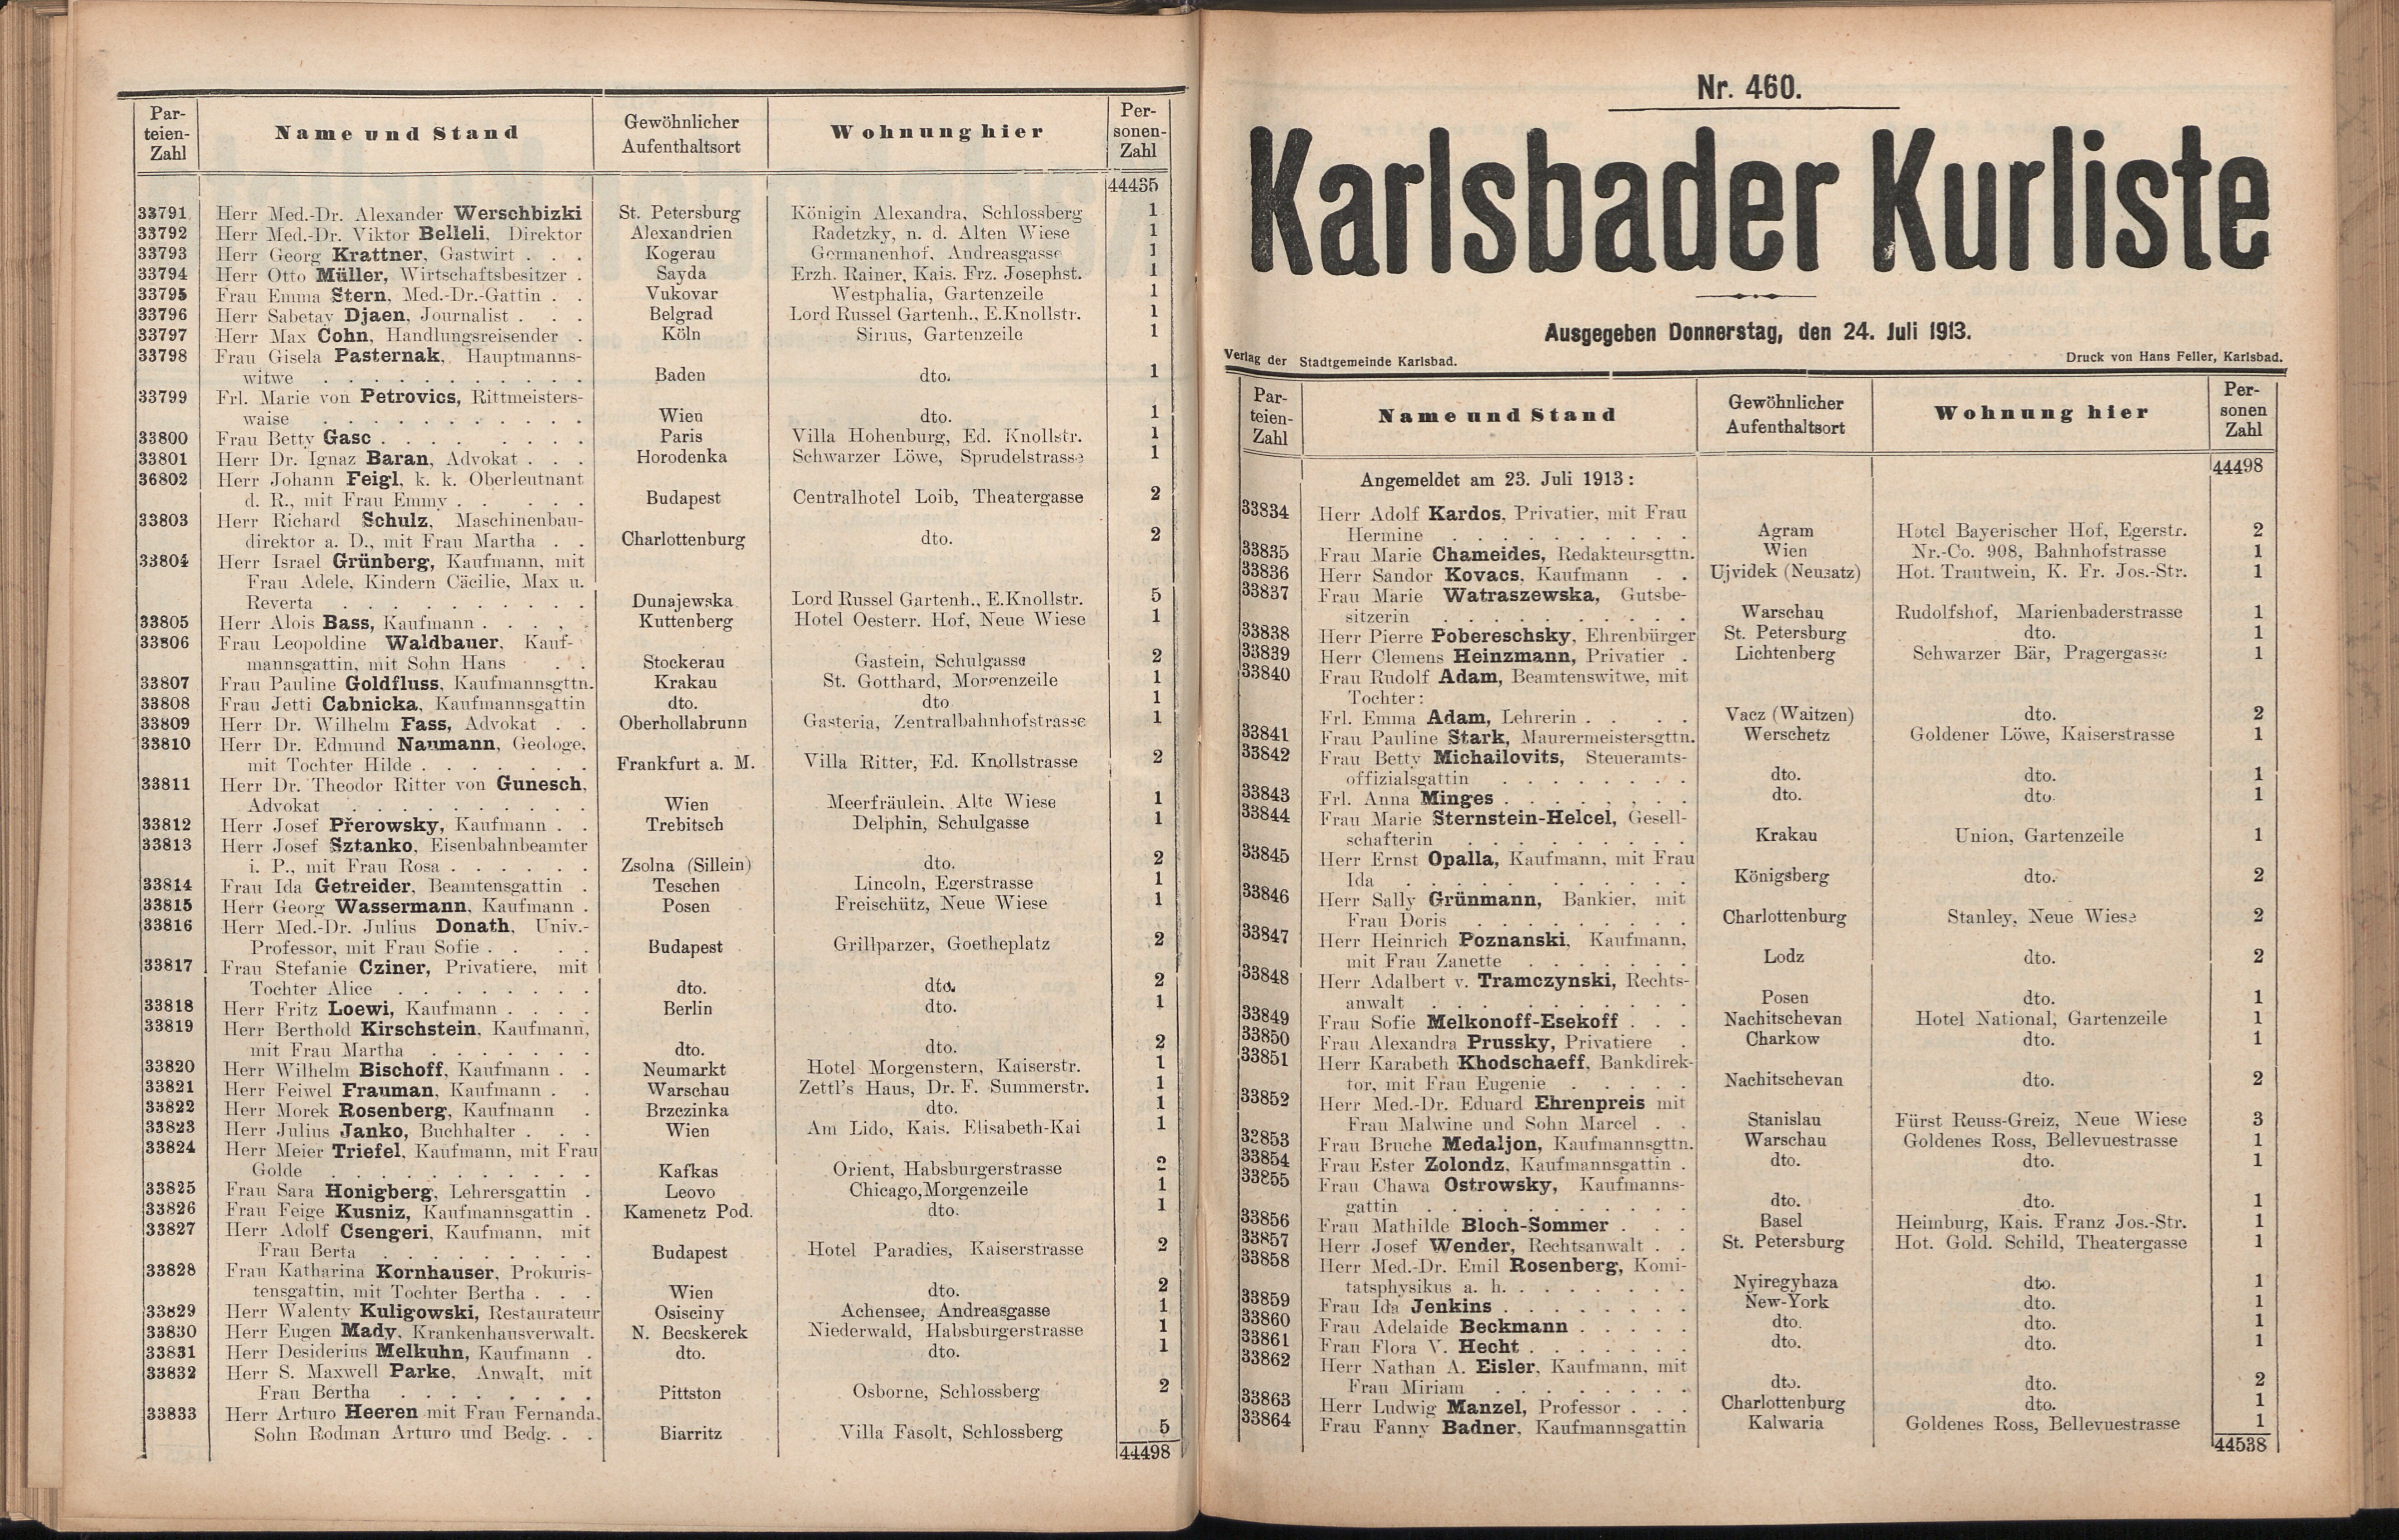 194. soap-kv_knihovna_karlsbader-kurliste-1913-2_1940